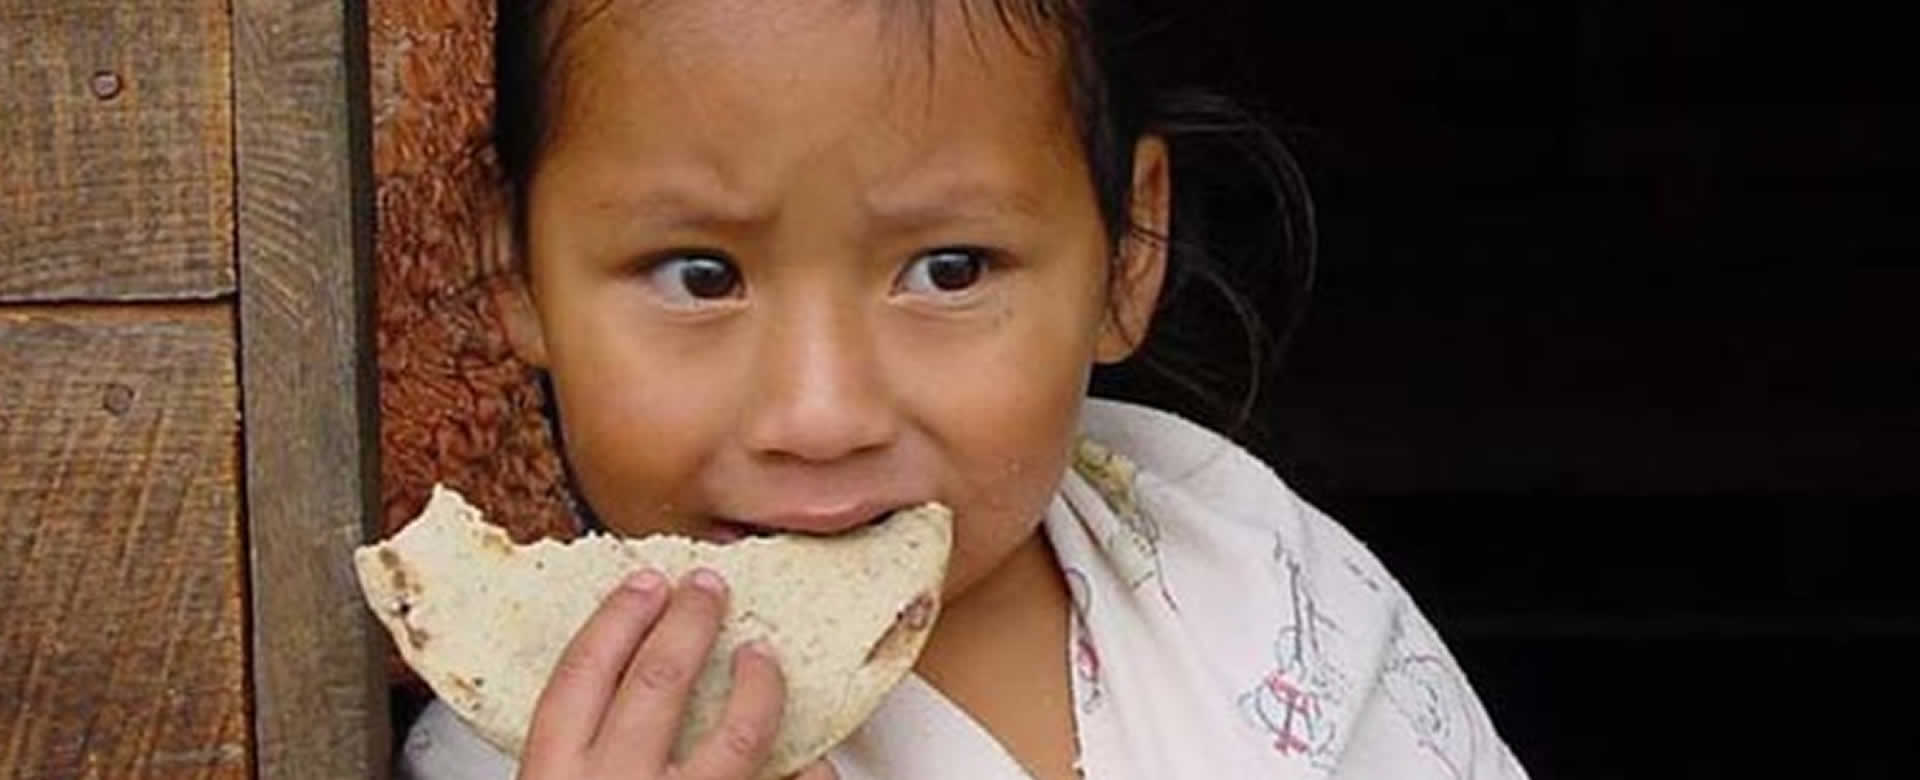 10 millones de niños podrán morir de hambre a causa del COVID-19